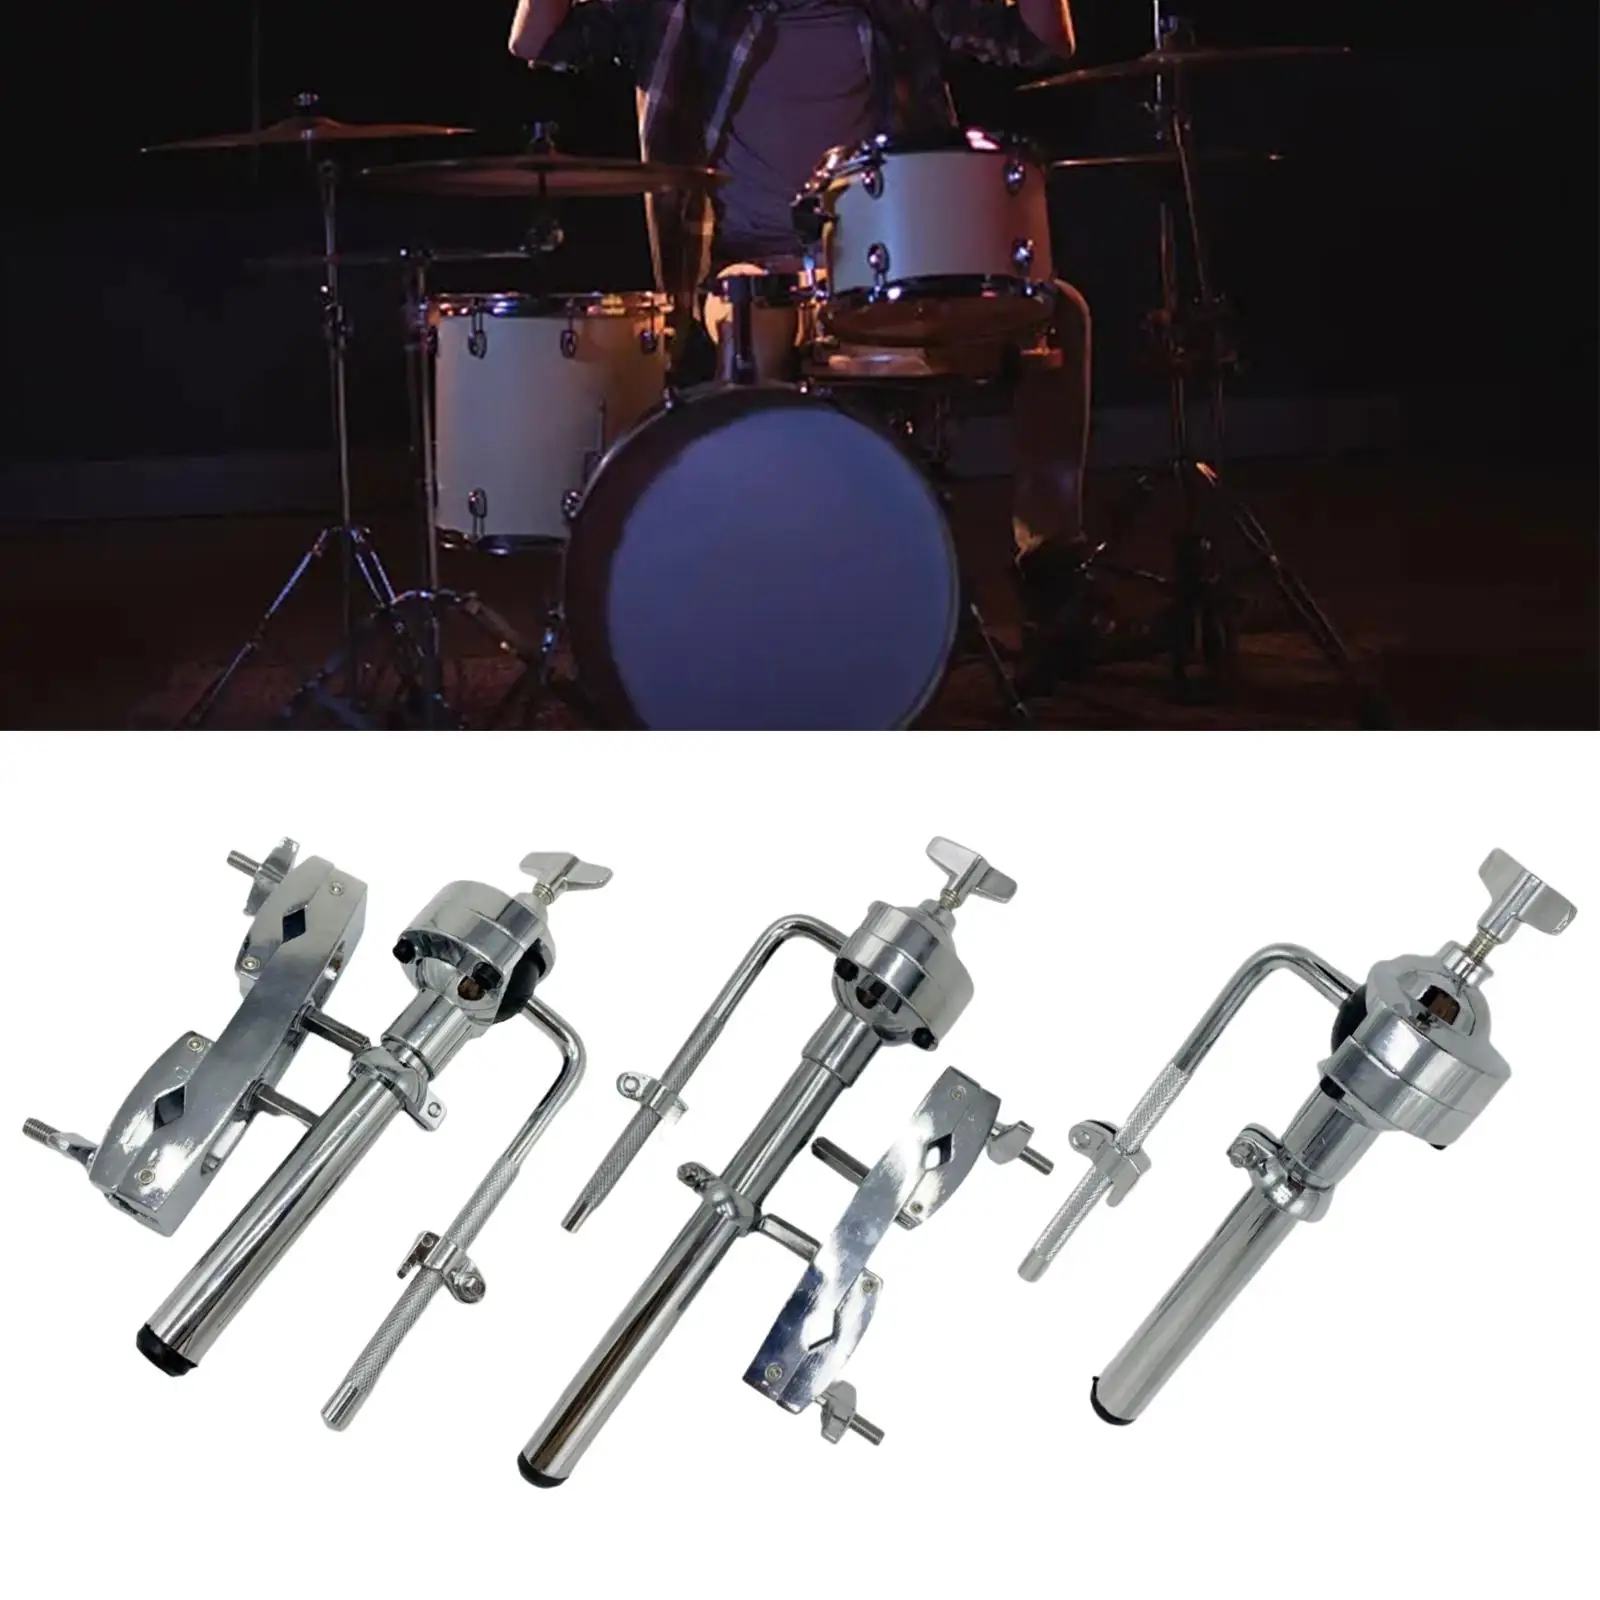 Tom Drum Holder Bracket Drum Hardware Percussion Mount Holder for Drum Set